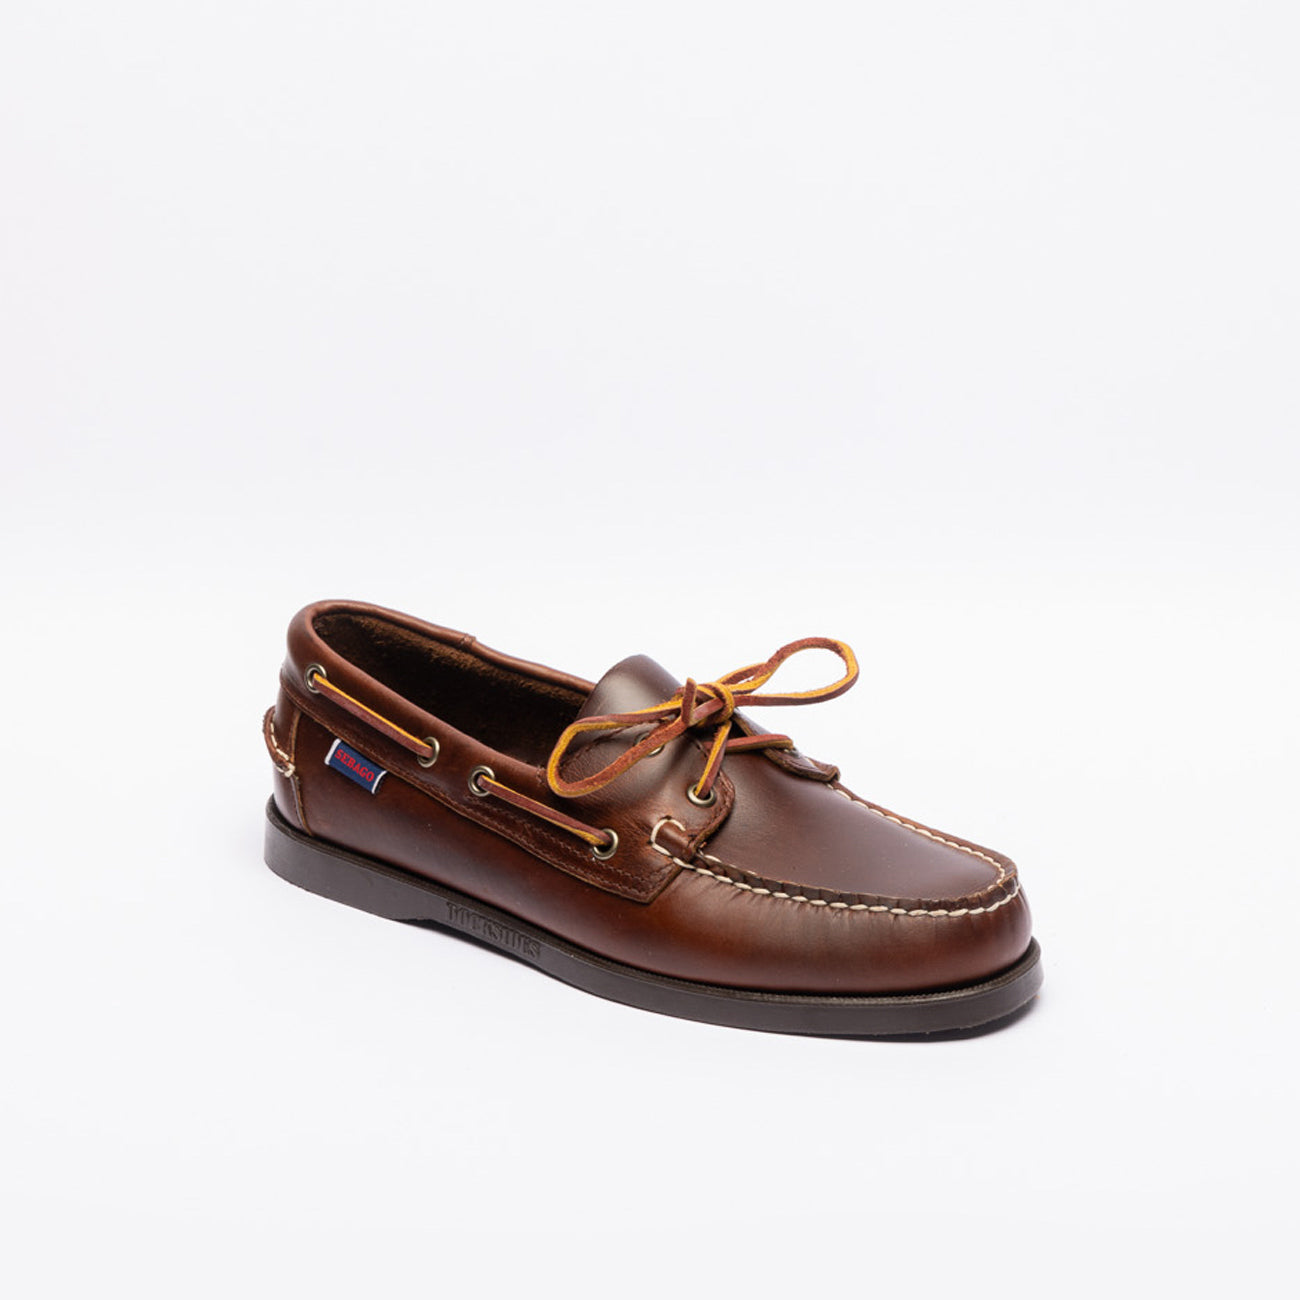 Sebago Docksides Portland boat shoes brown calf leather (Brown) dark sole